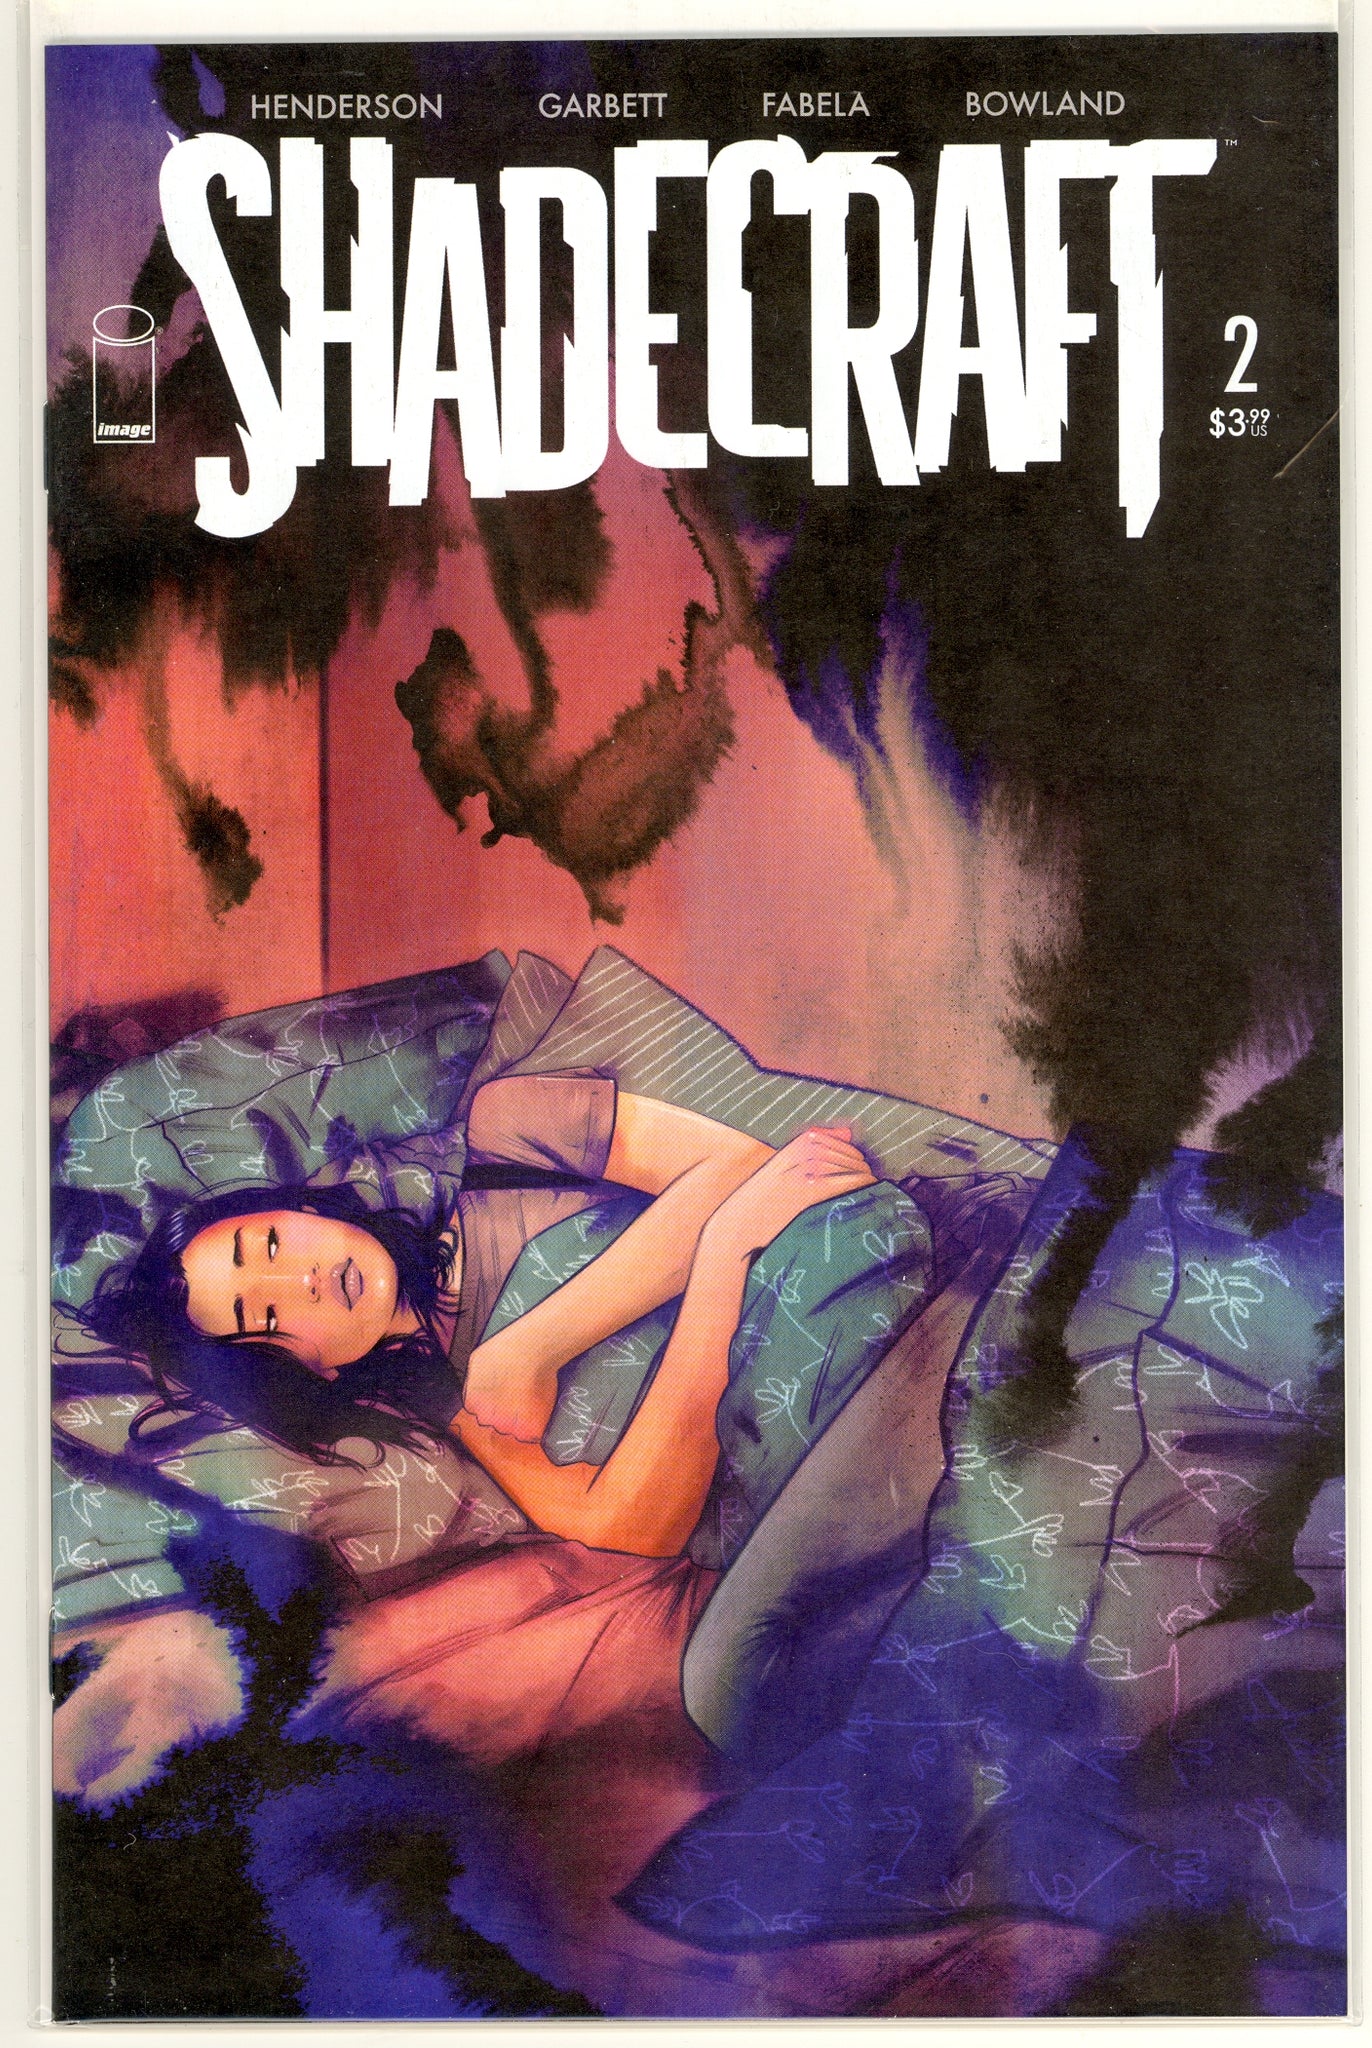 Shadecraft #2 (2021) cover B